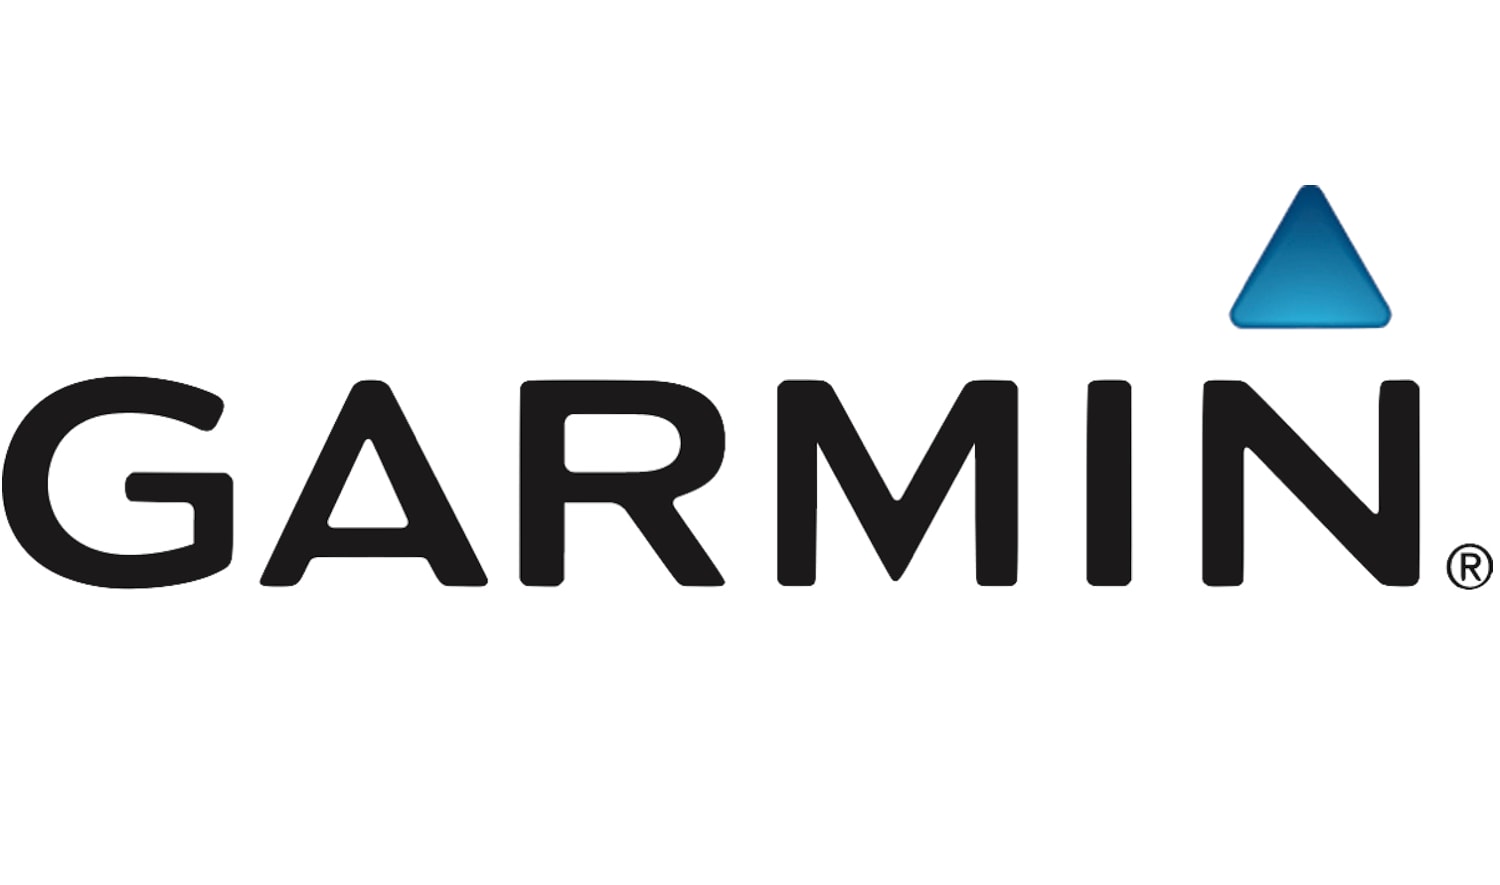 garmin logo